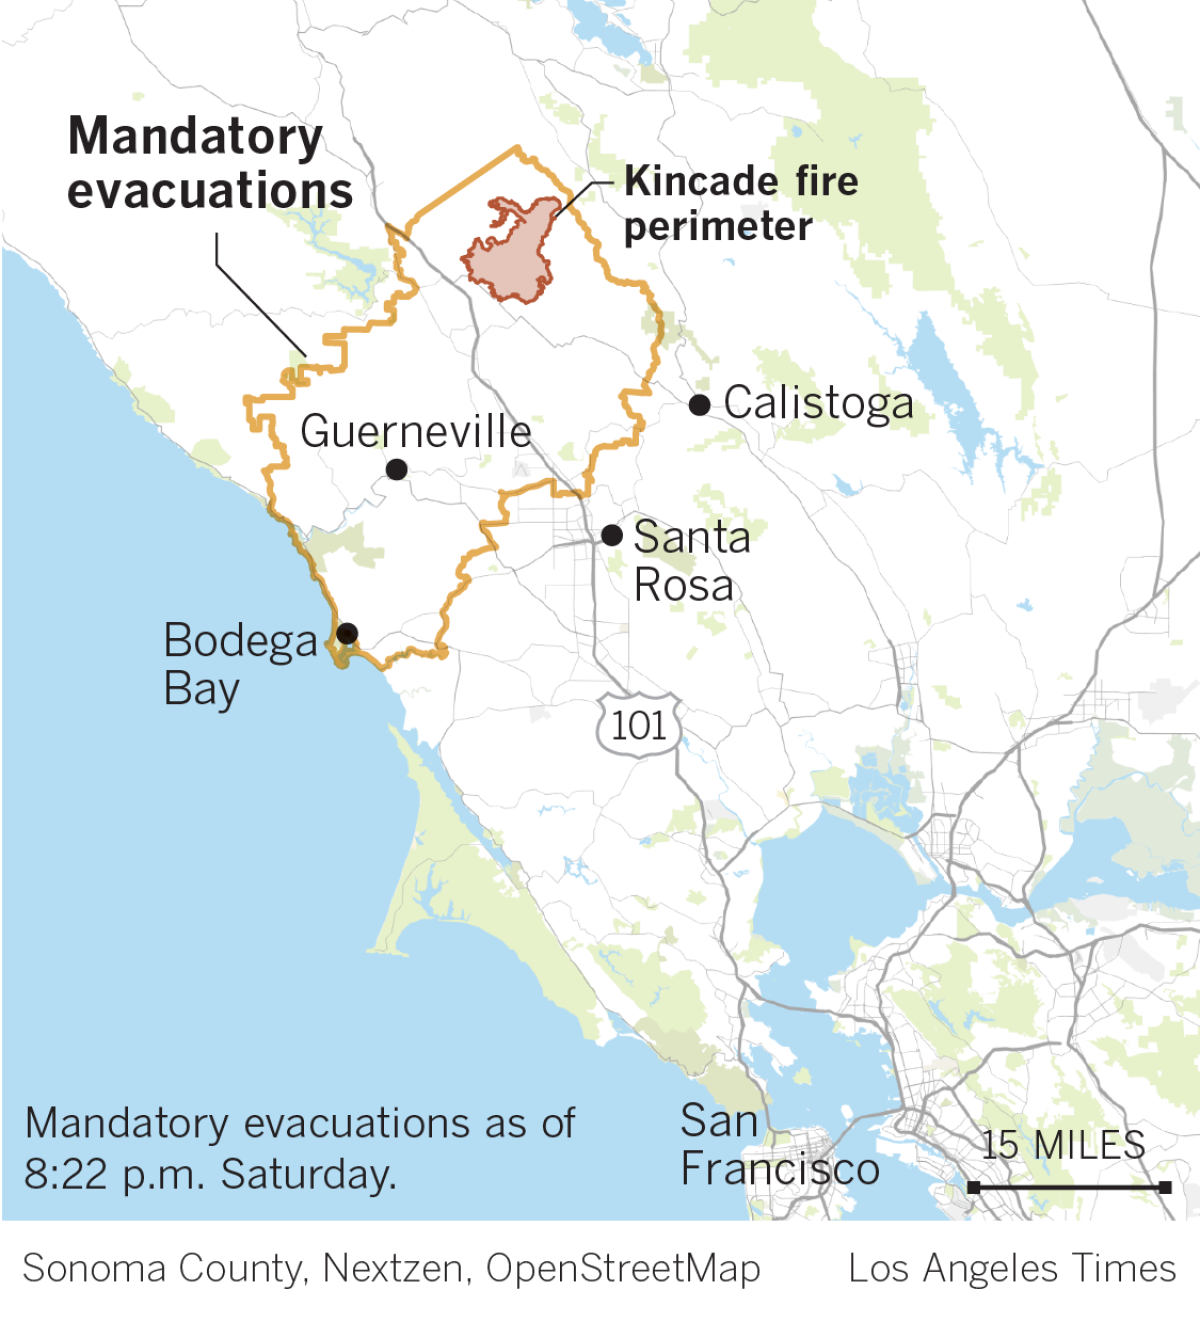 Map of mandatory evacuations near the Kincade fire in California as of 8:22 p.m. Saturday